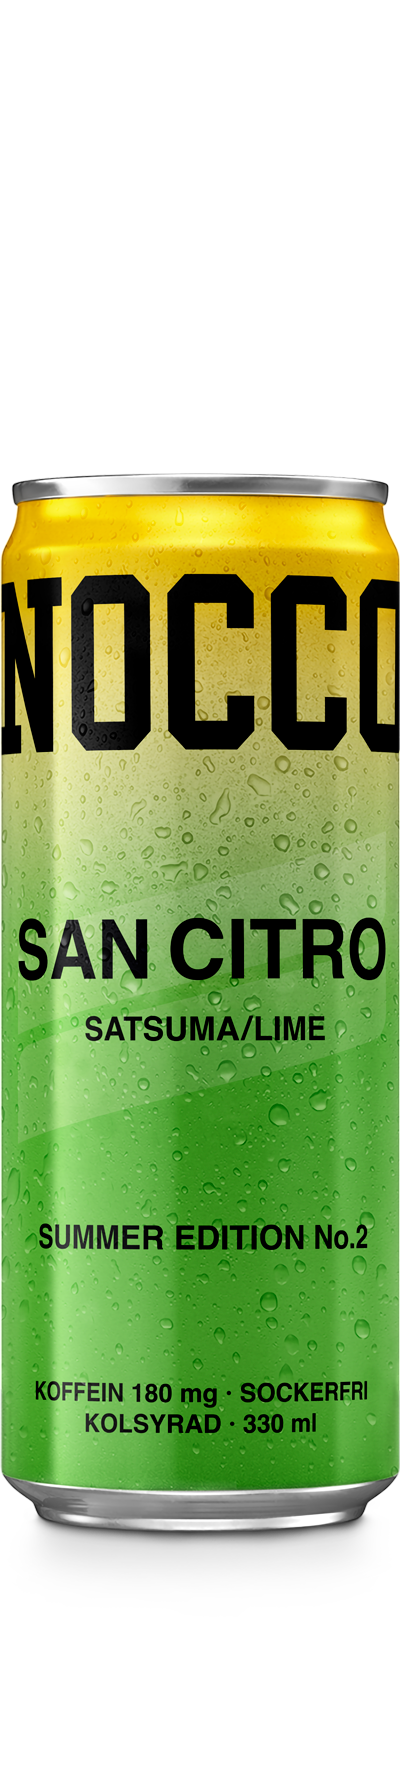 SE_NOCCO_SanCitro_6.0_web.png